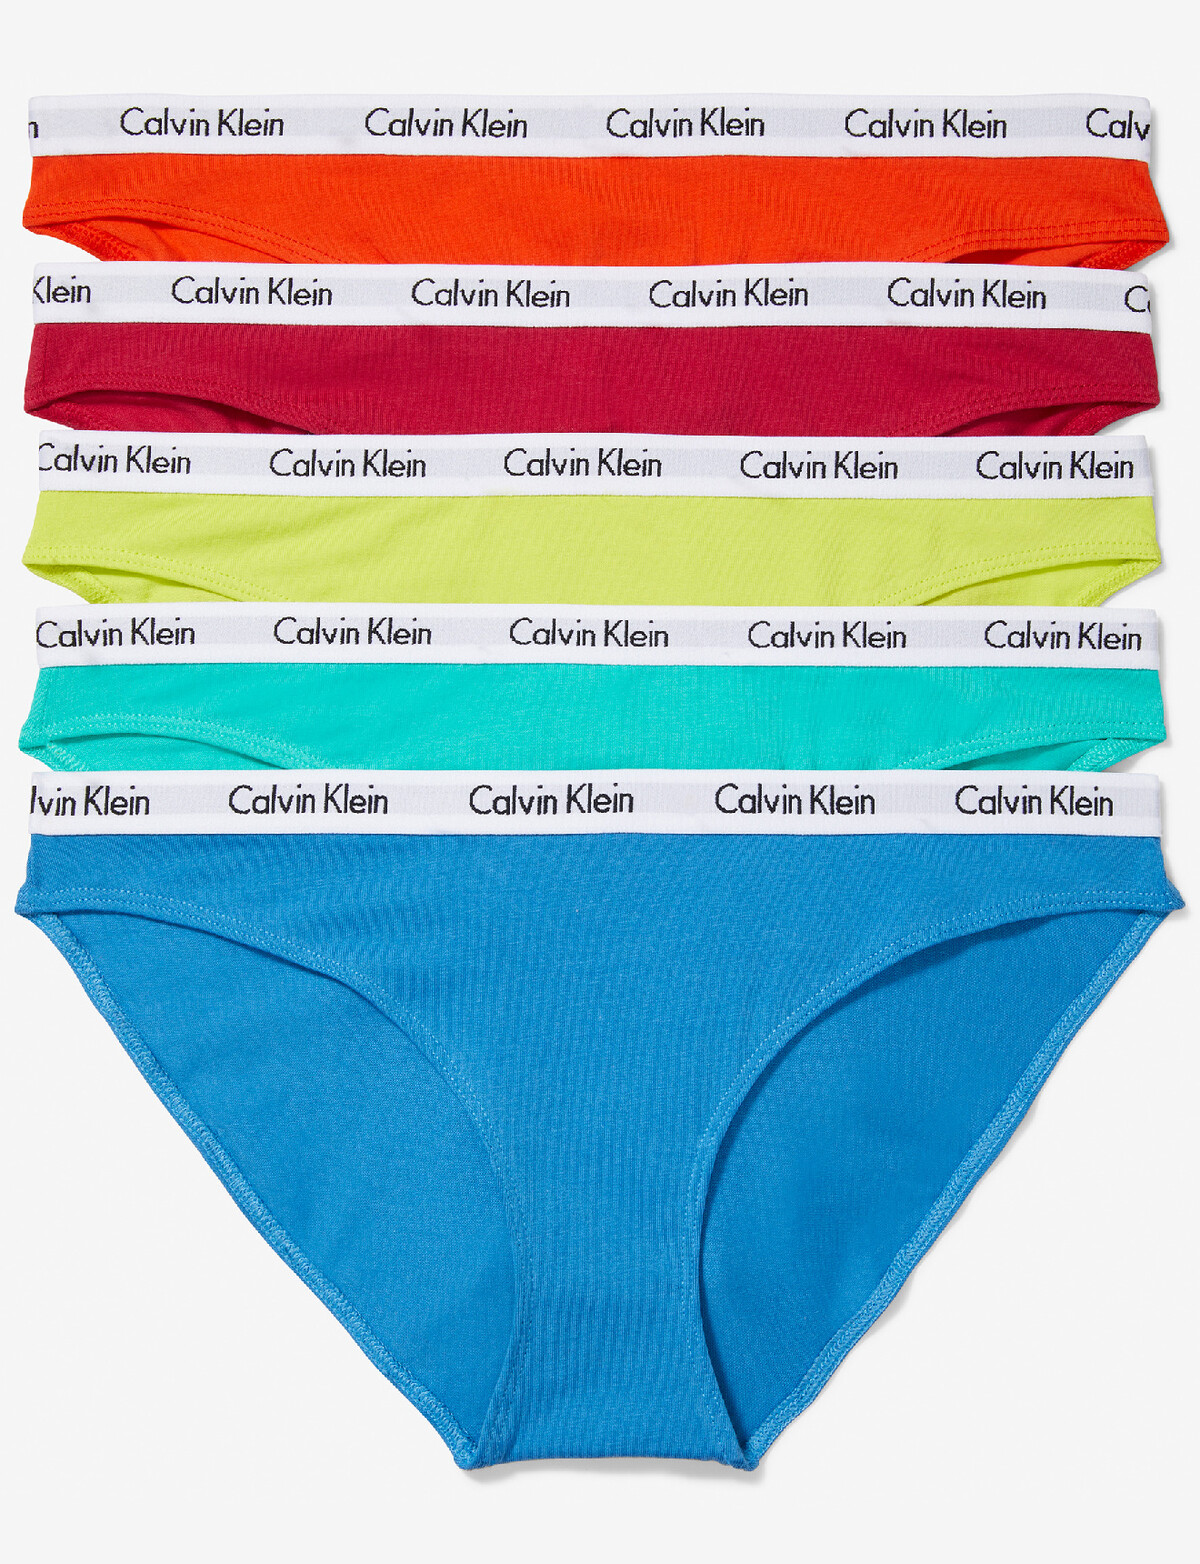 Calvin Klein Carousel Bikini Brief, 5-Pack, Pride, Assorted - Briefs